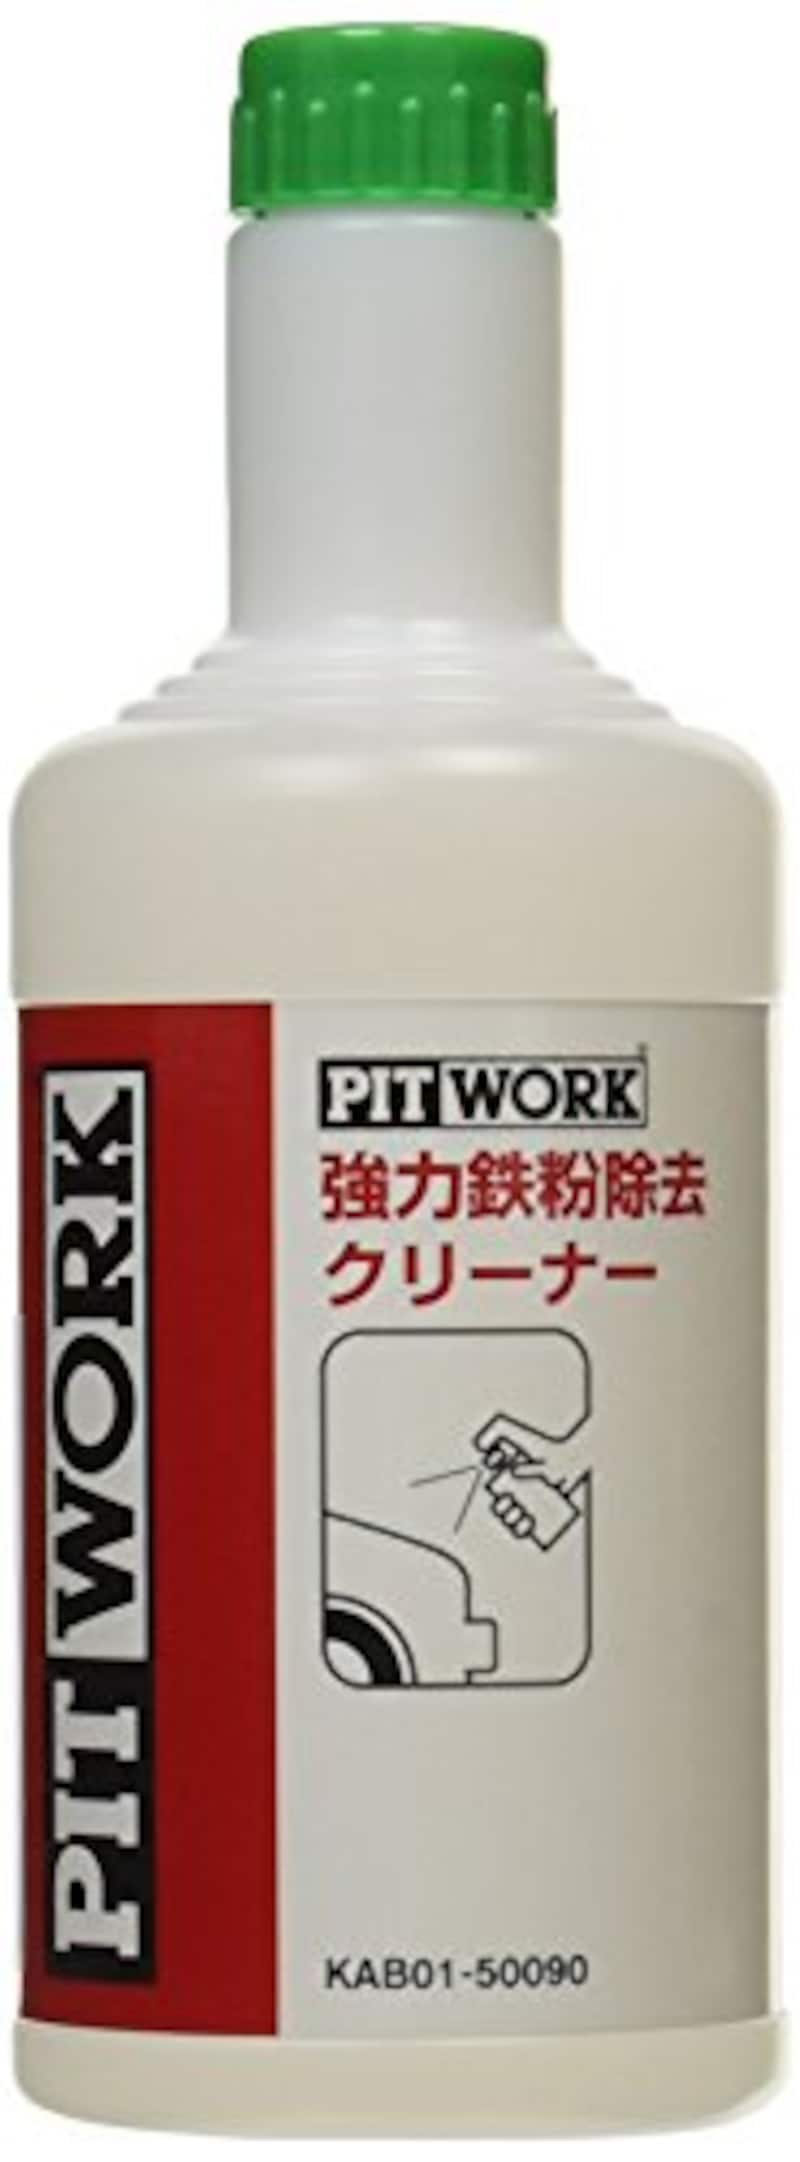 PITWORK（ピットワーク）,強力鉄粉除去クリーナー スプレータイプ,KAB01-50090